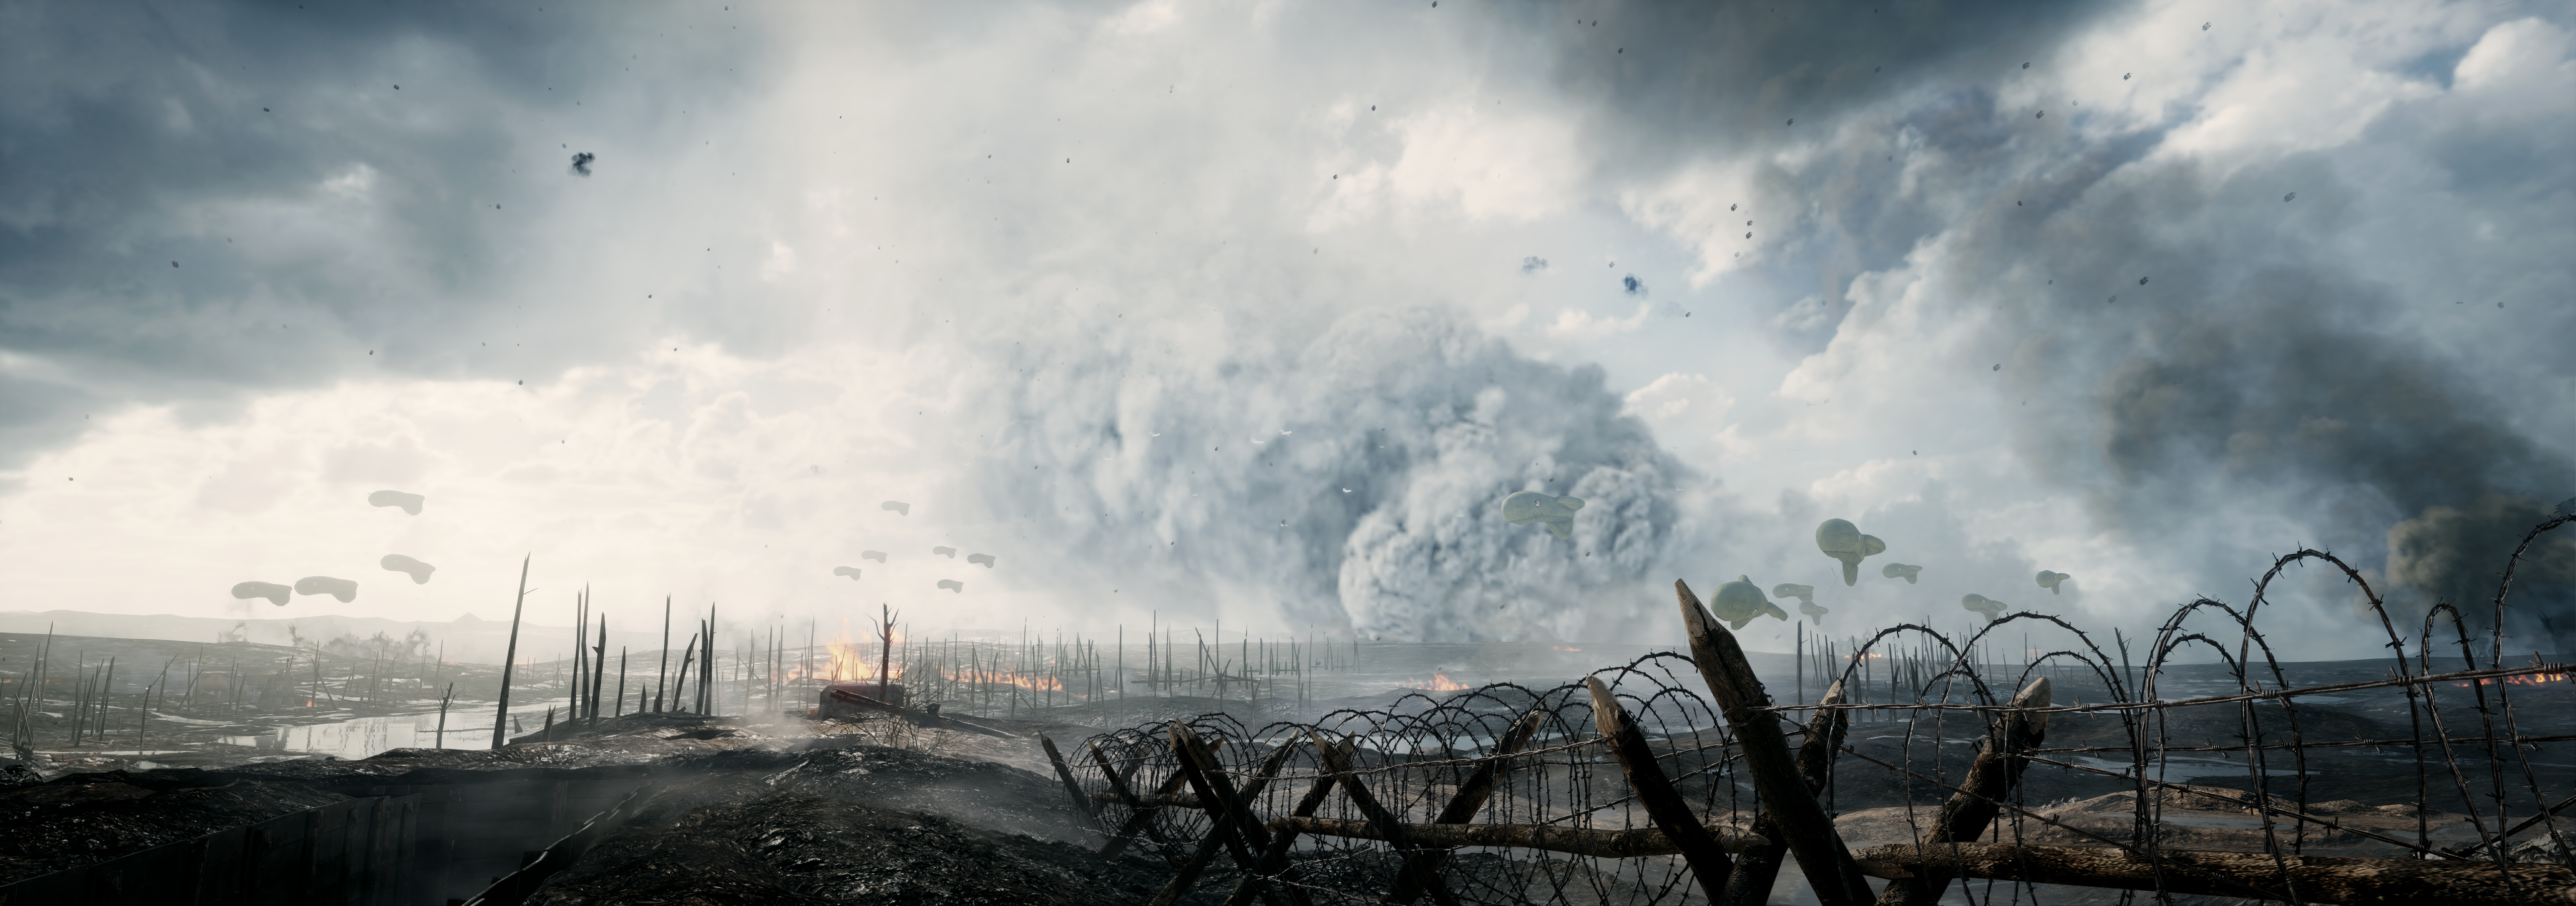 Battlefield 1 HD Wallpaper by Tolik Pavlov